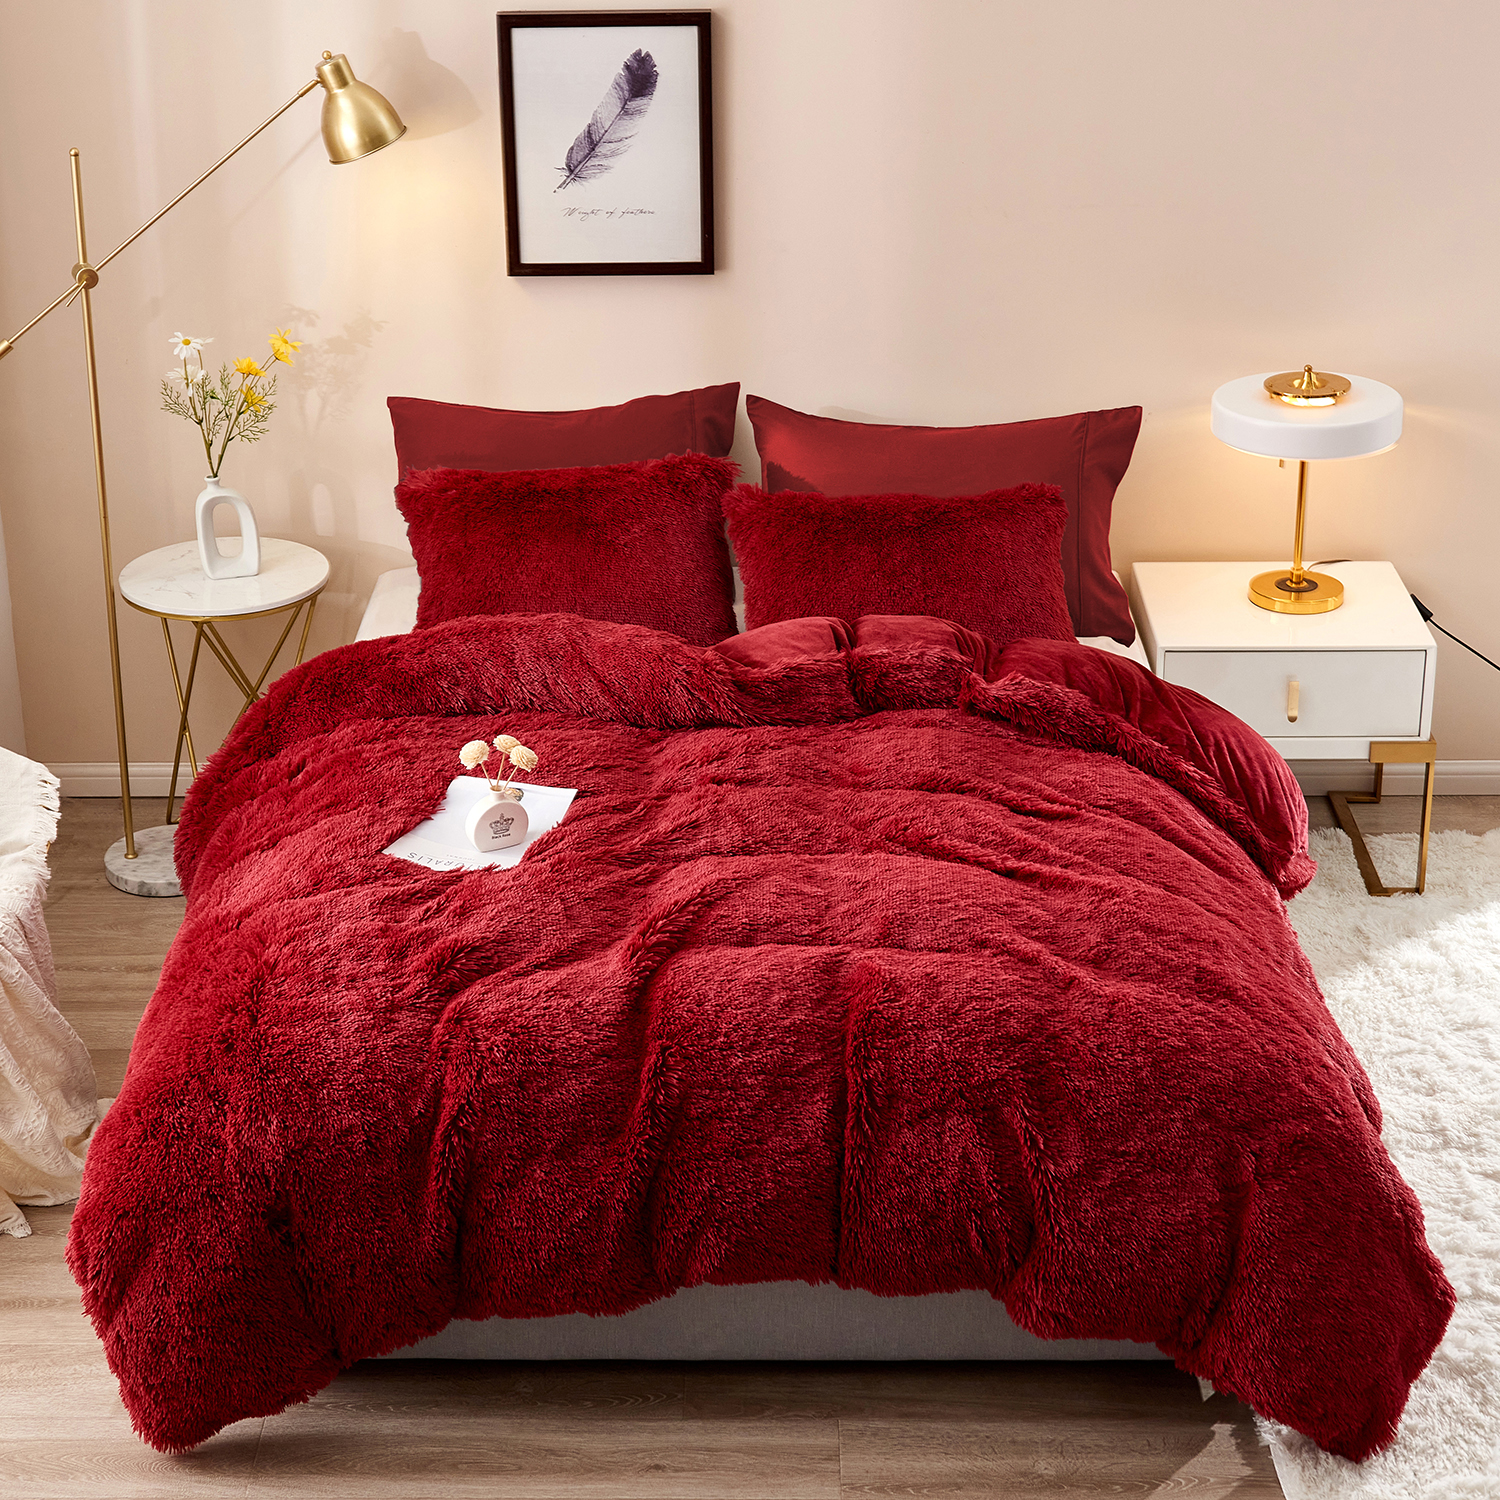 LUXURY PREMIUM VELVET Duvet Cover Bedding Set Warm Soft Smooth FLORAL PATTERN